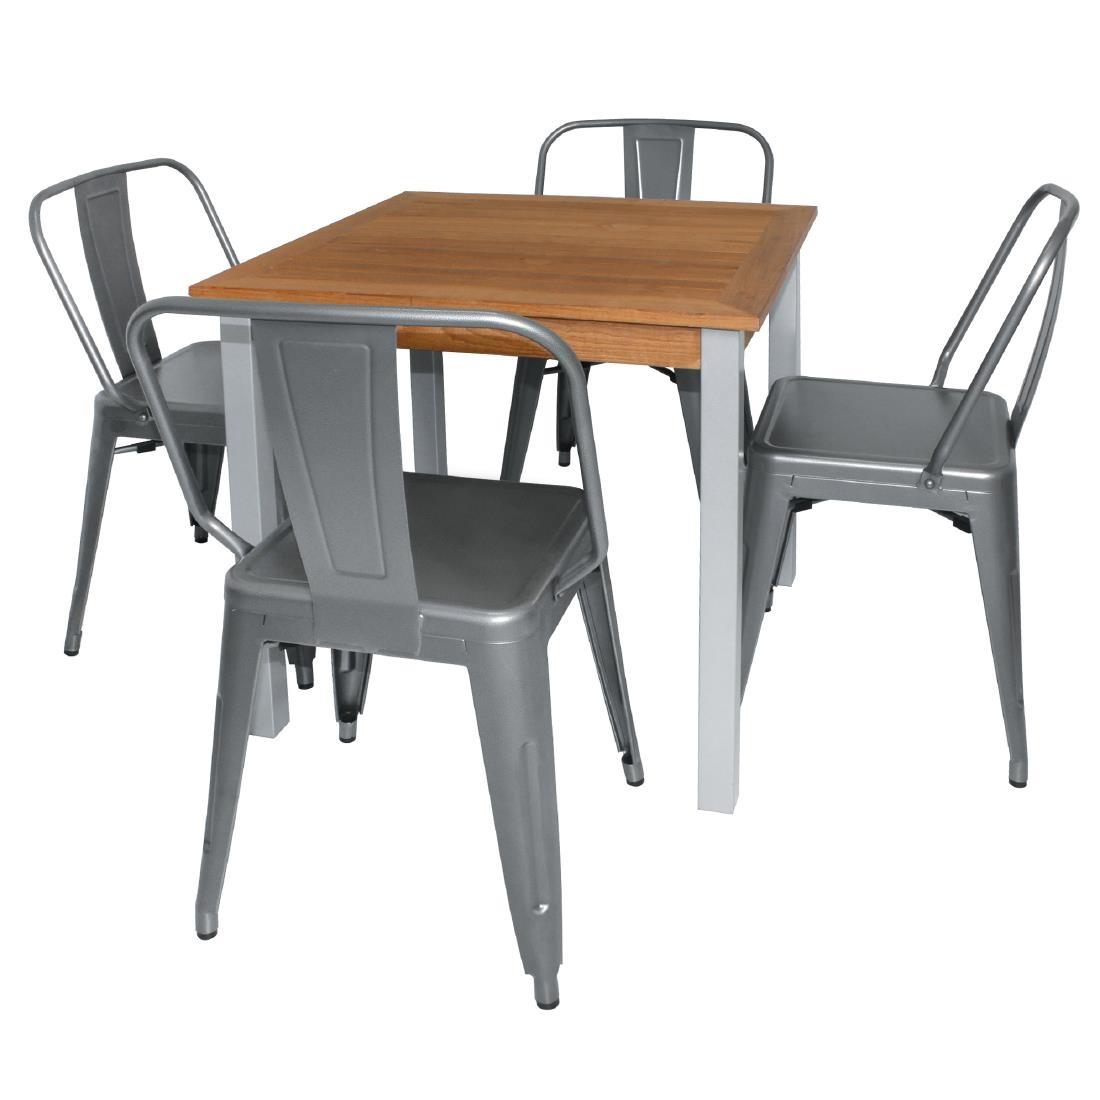 Bolero Wood and Aluminium Square Table 800mm - Y821  - 2